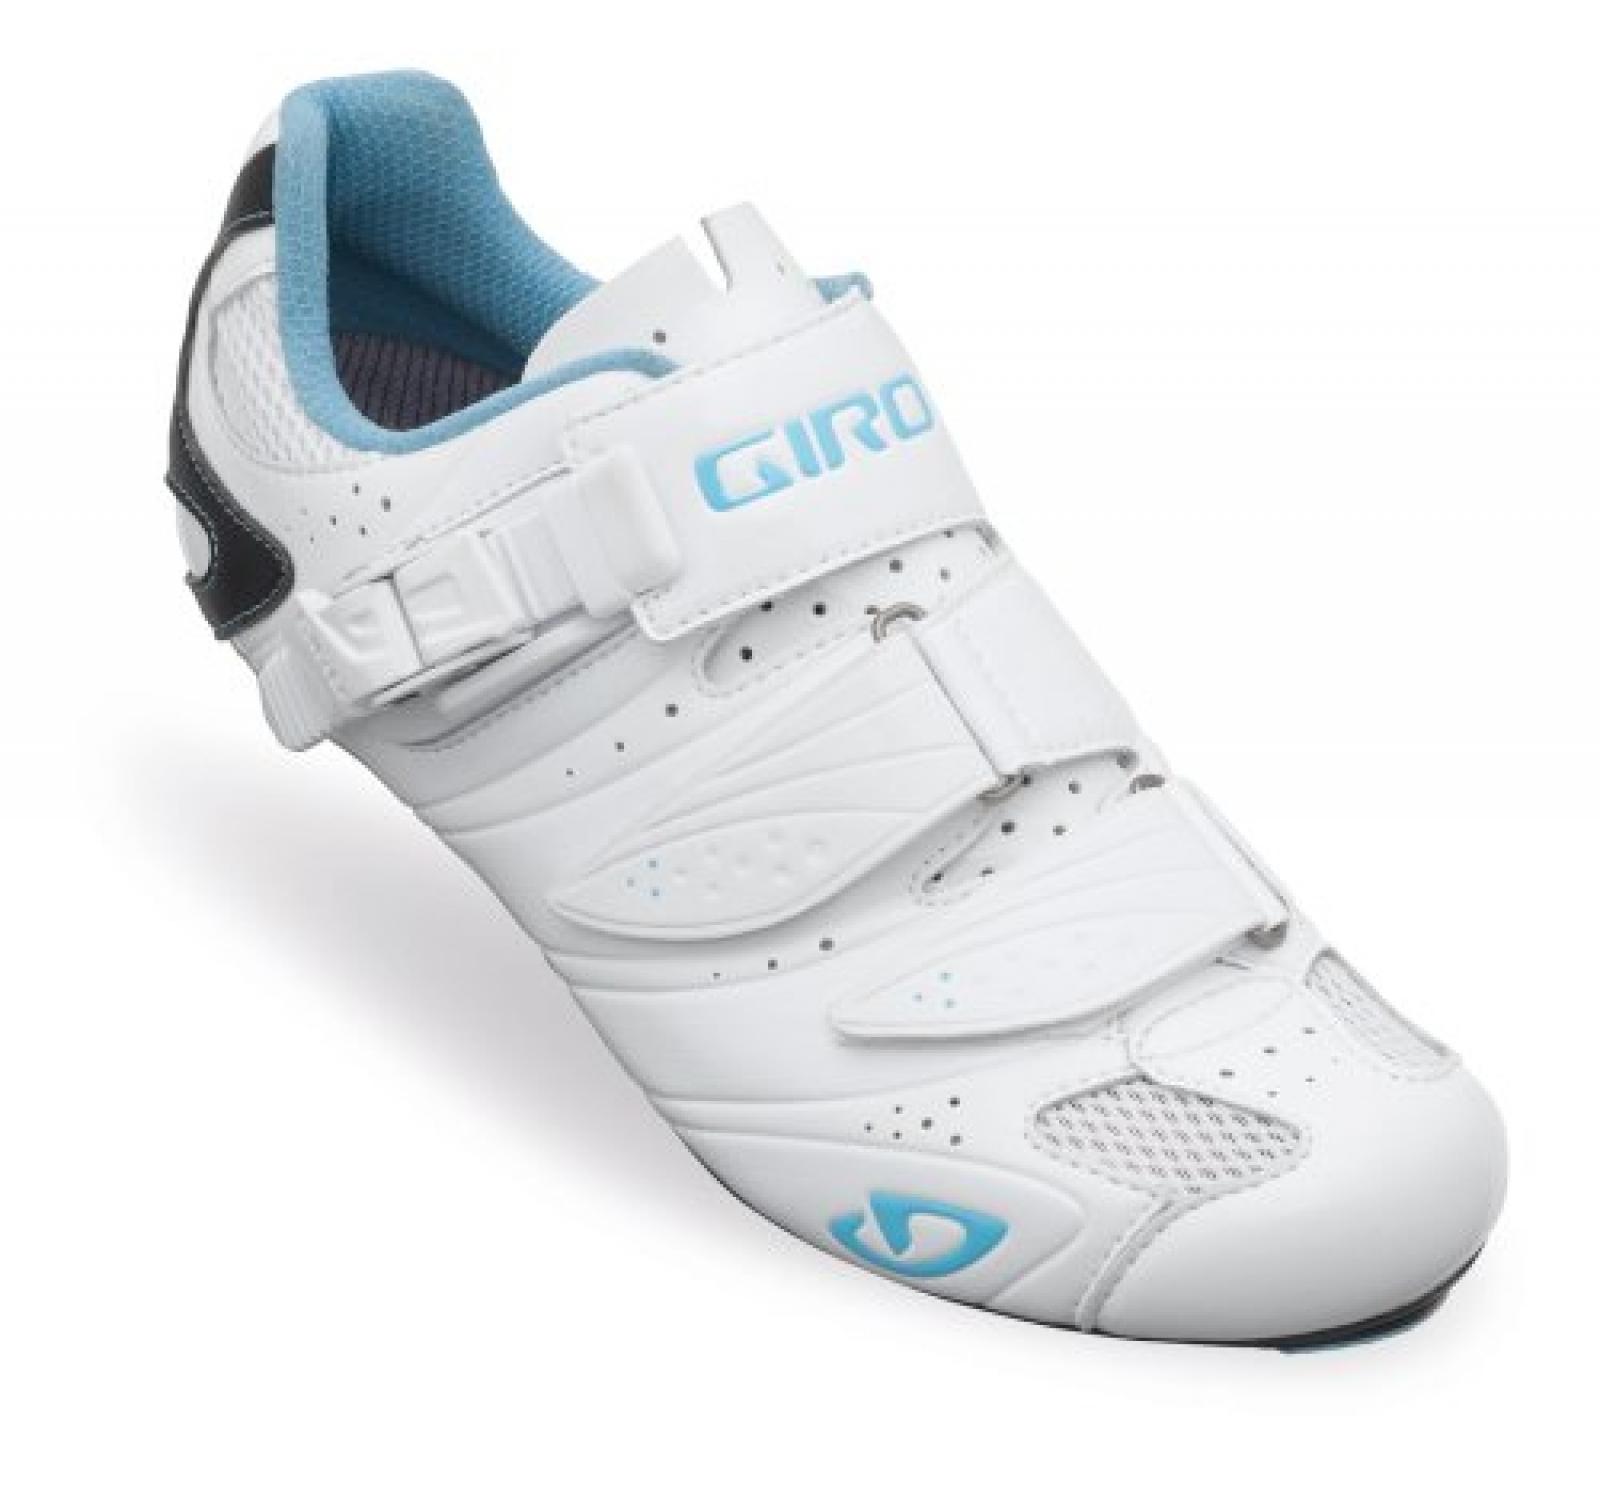 Giro Factress Damen Rennrad Fahrrad Schuhe weiß/blau 2014 